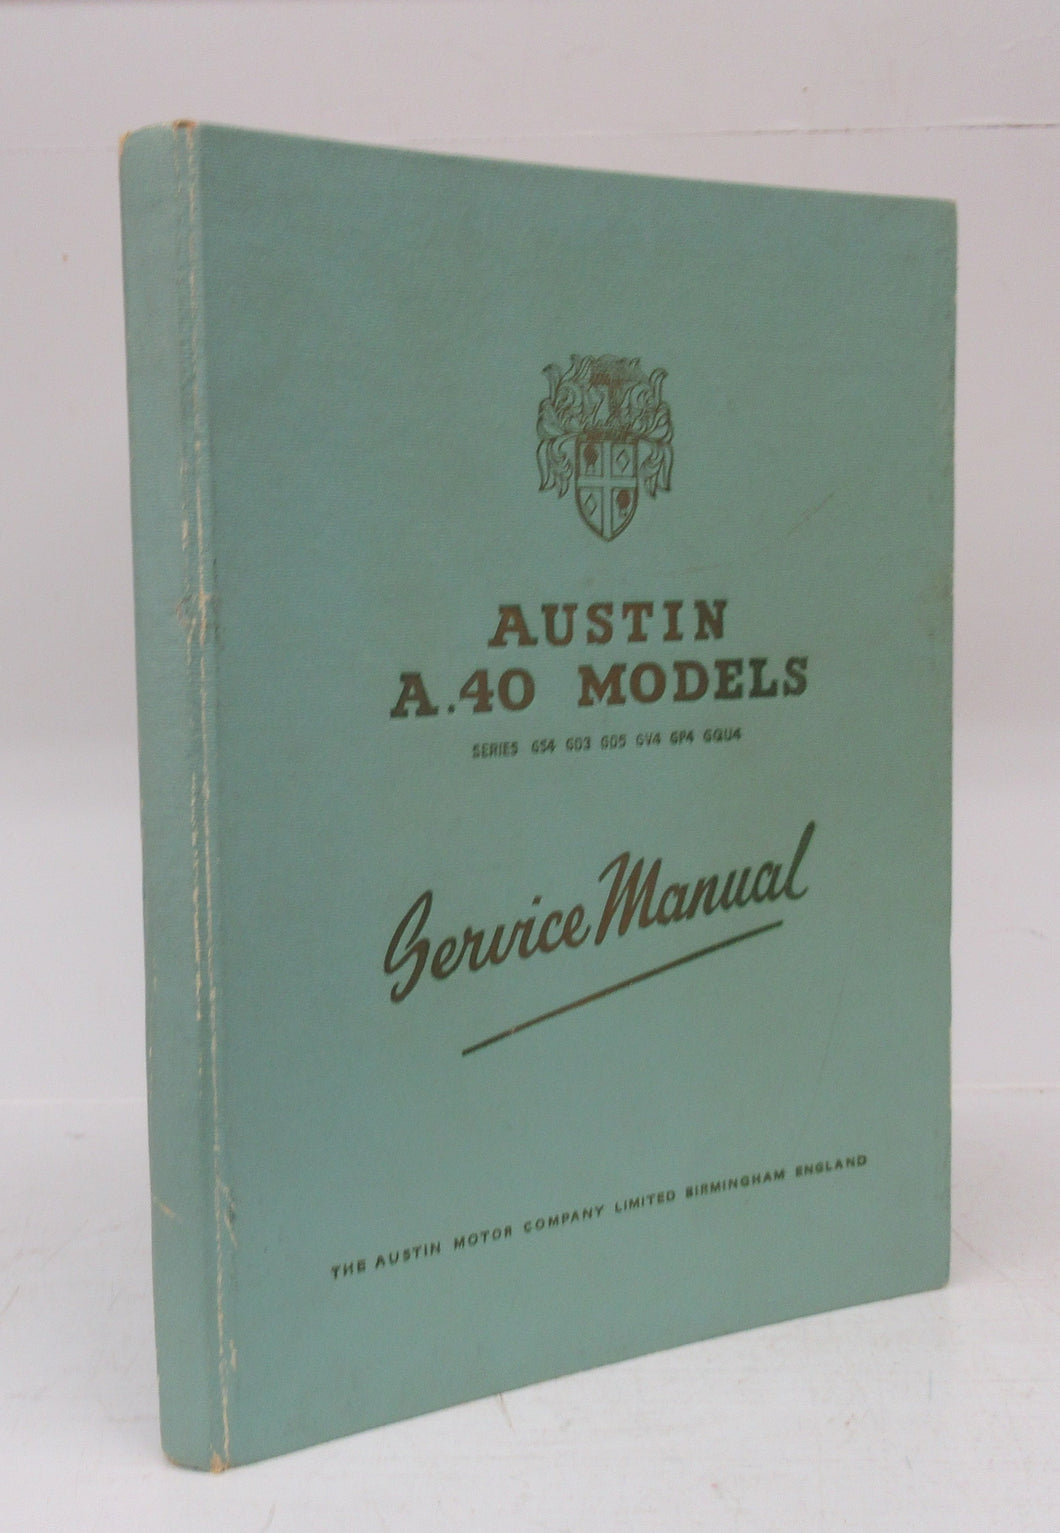 Austin A40 Models Service Manual, 1957